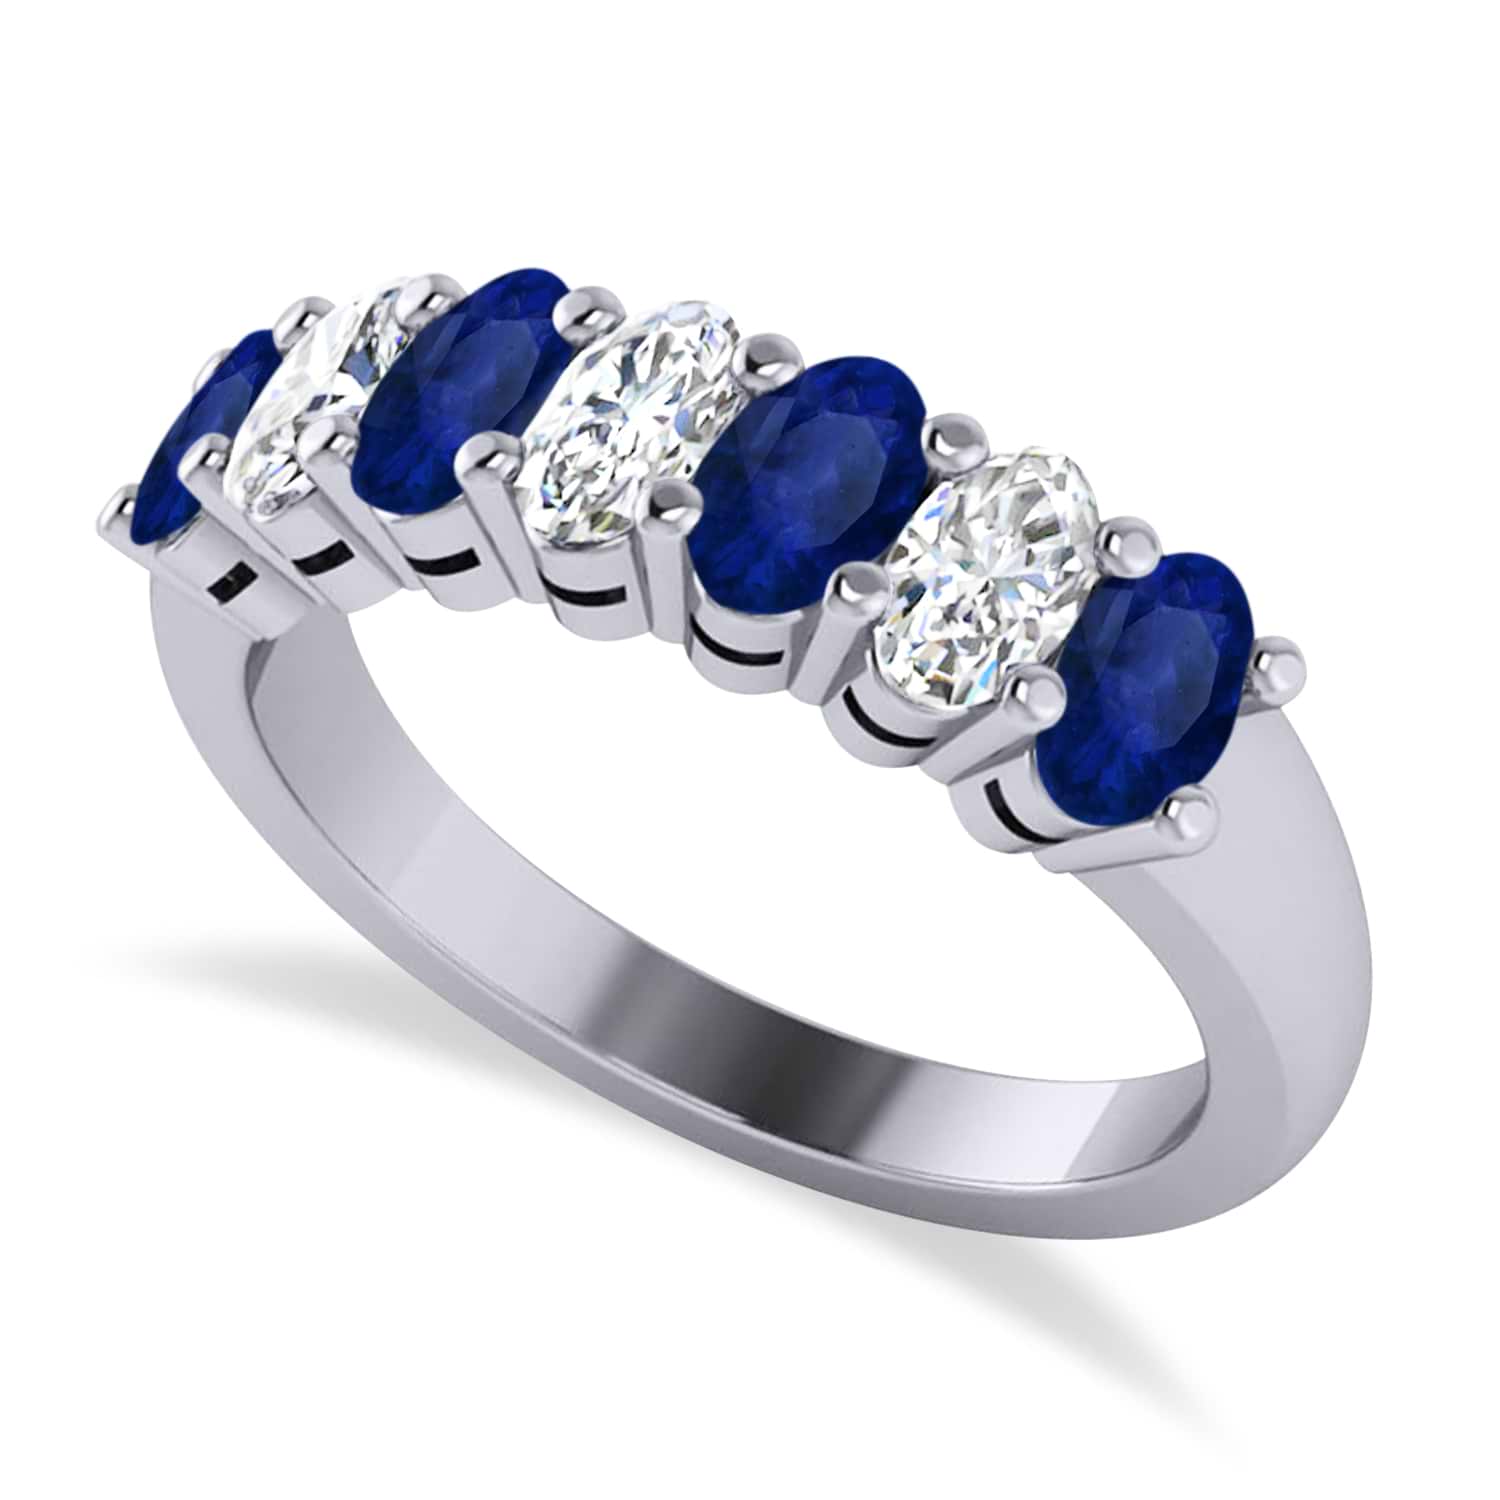 Oval Diamond & Blue Sapphire Seven Stone Ring 14k White Gold (2.15ct)